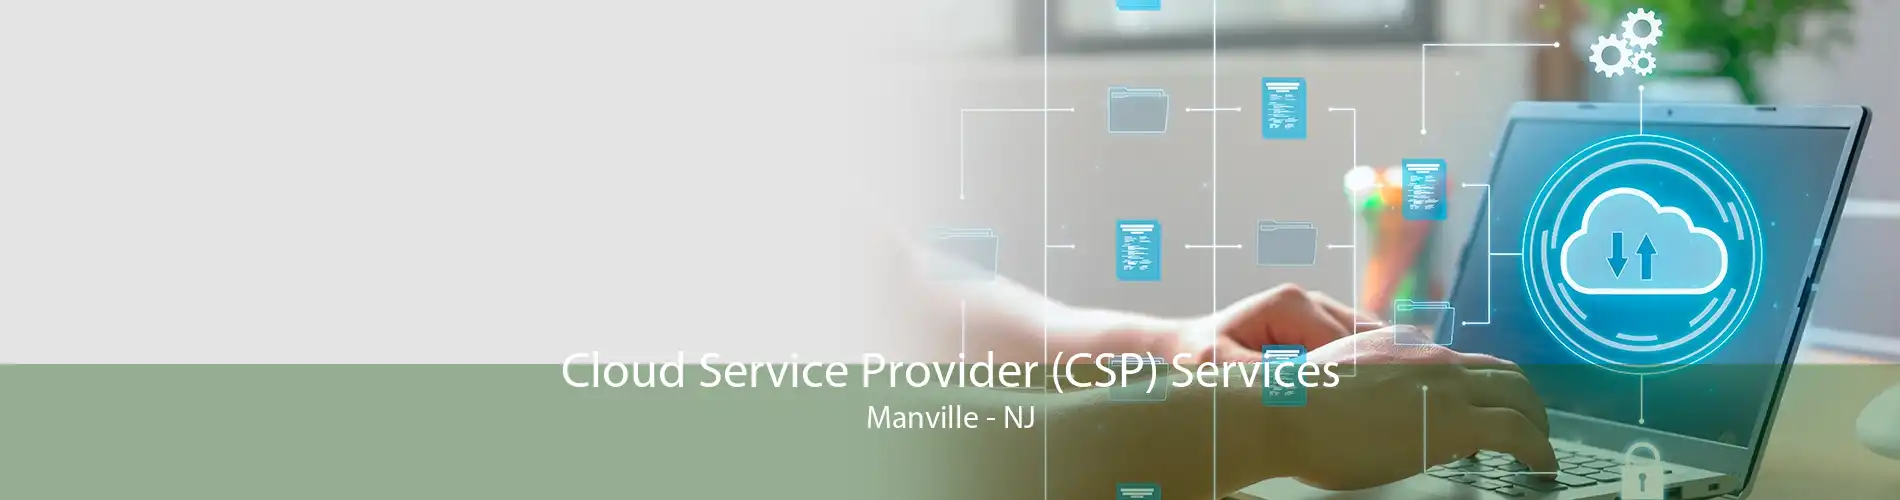 Cloud Service Provider (CSP) Services Manville - NJ